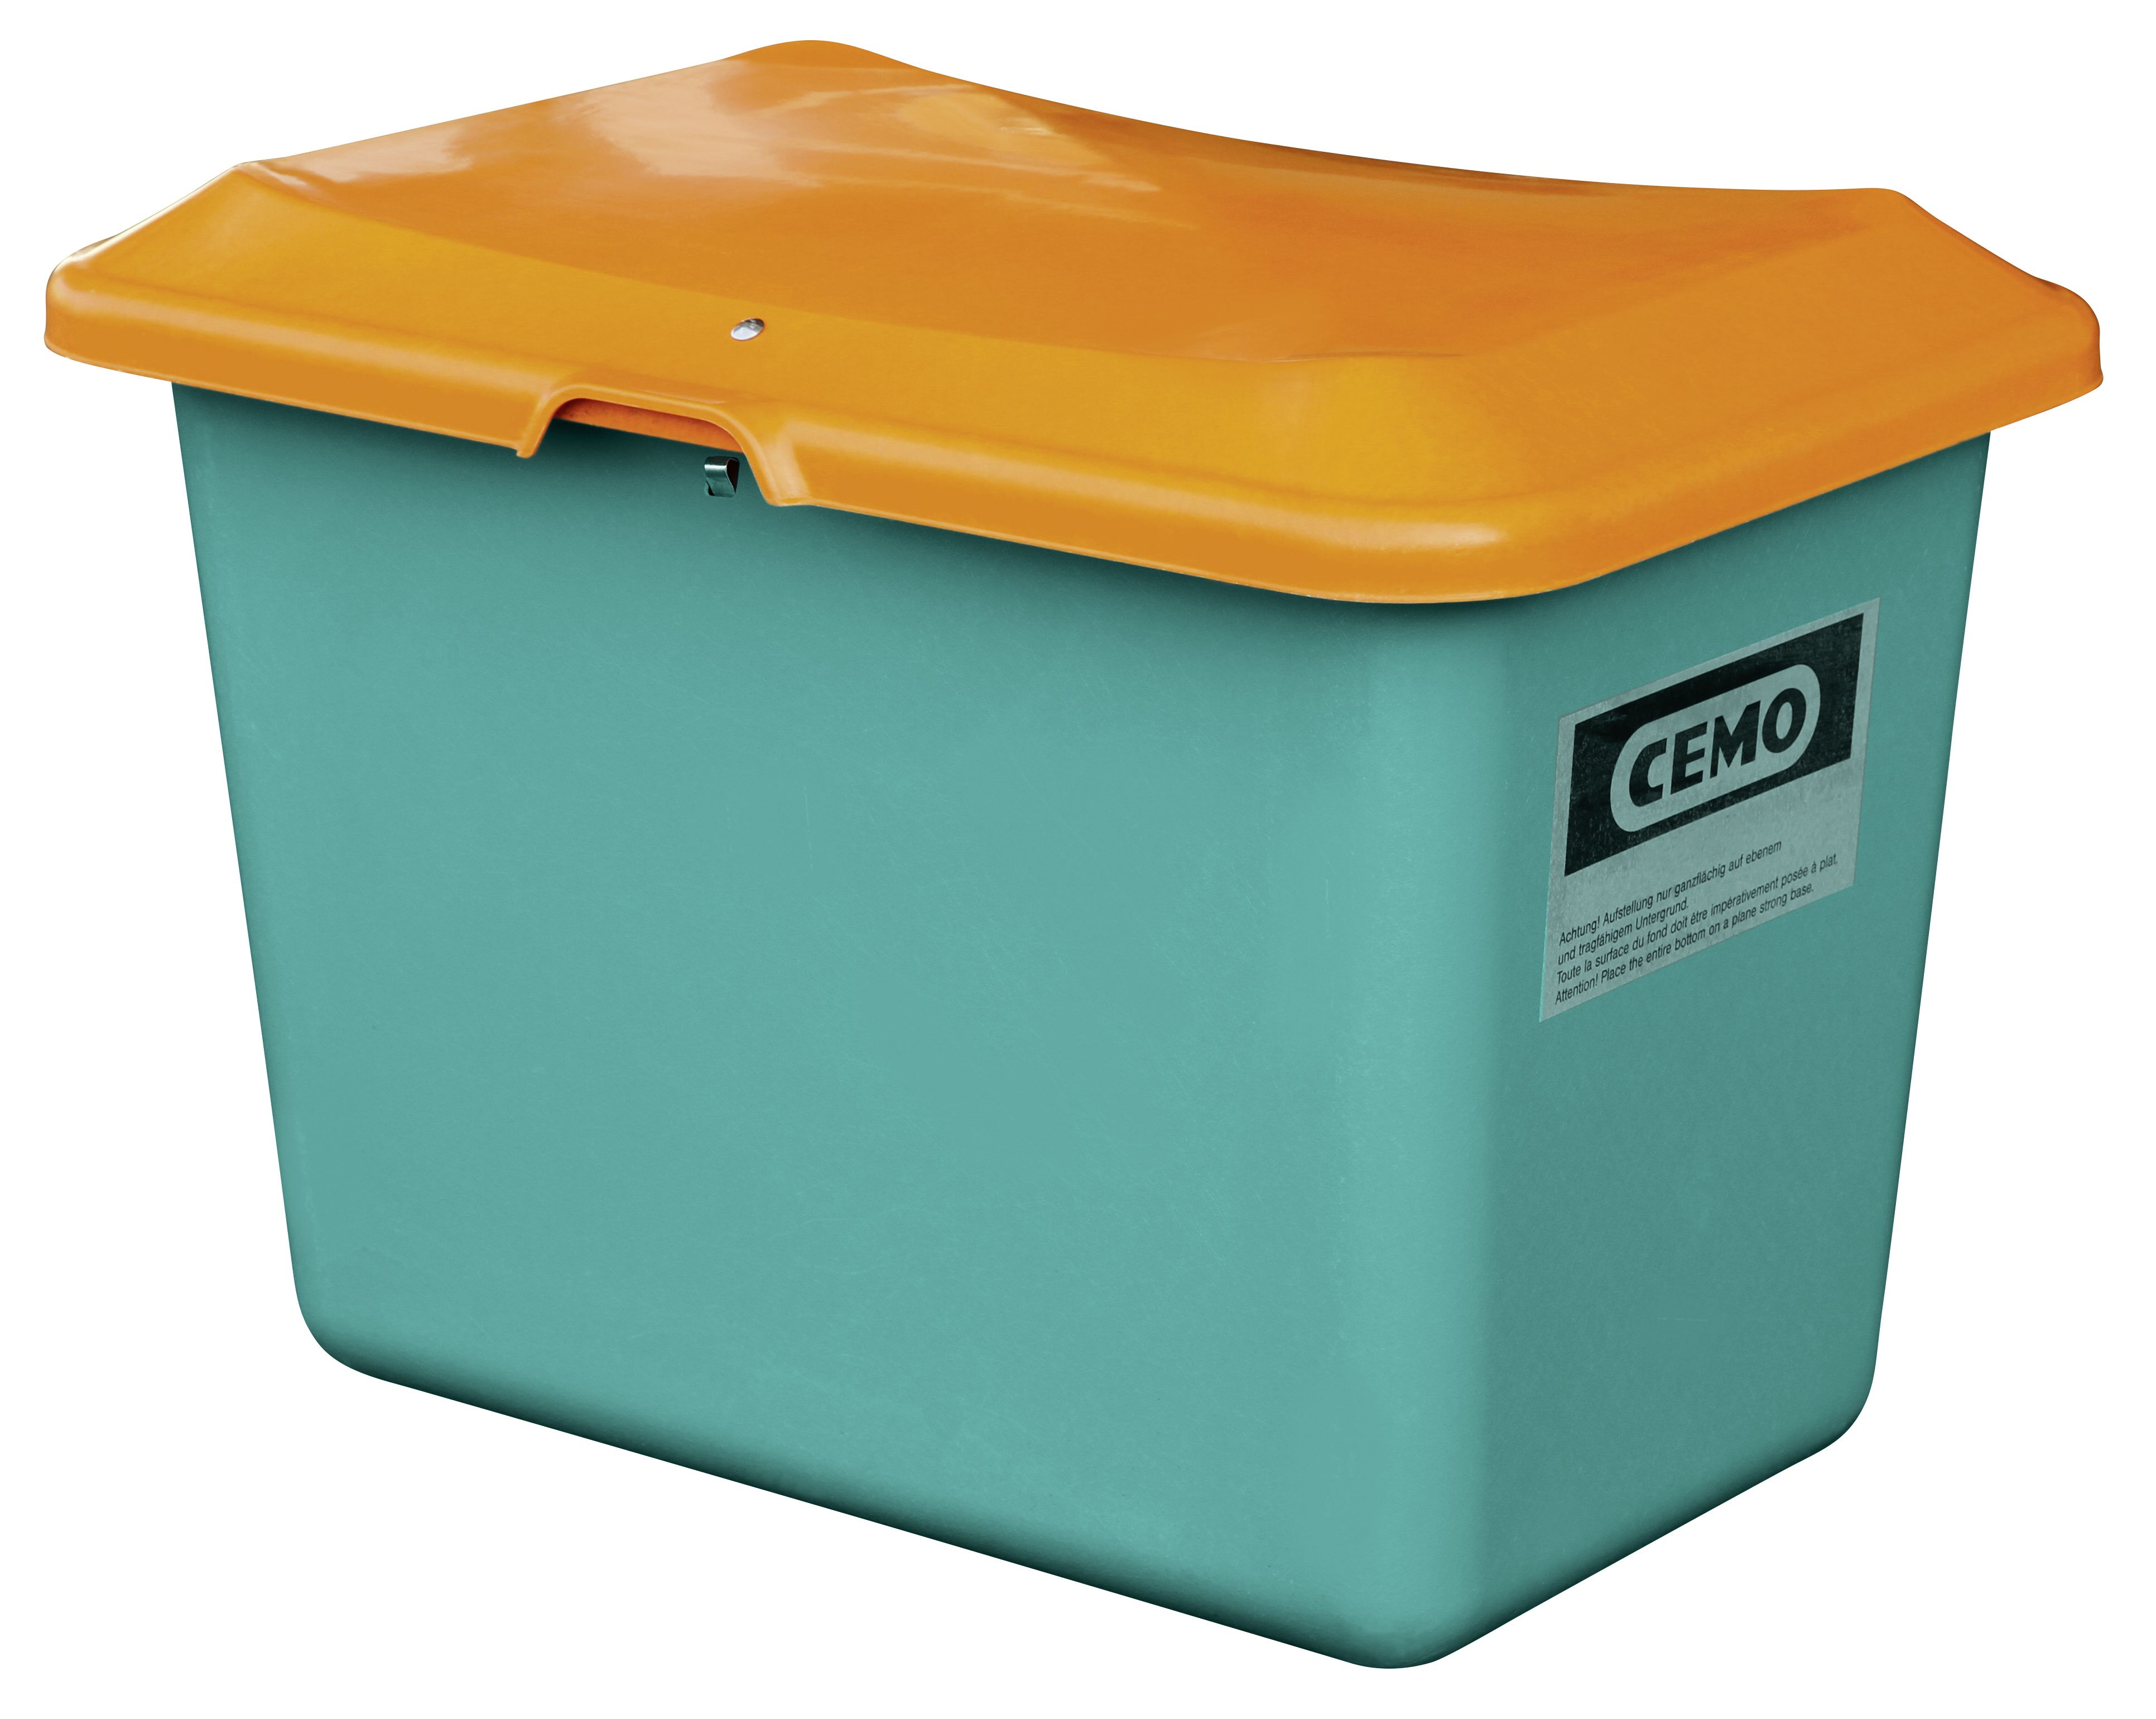 CEMO GFK Streugutbehälter PLUS3, 100 l, grün/orange - 10573